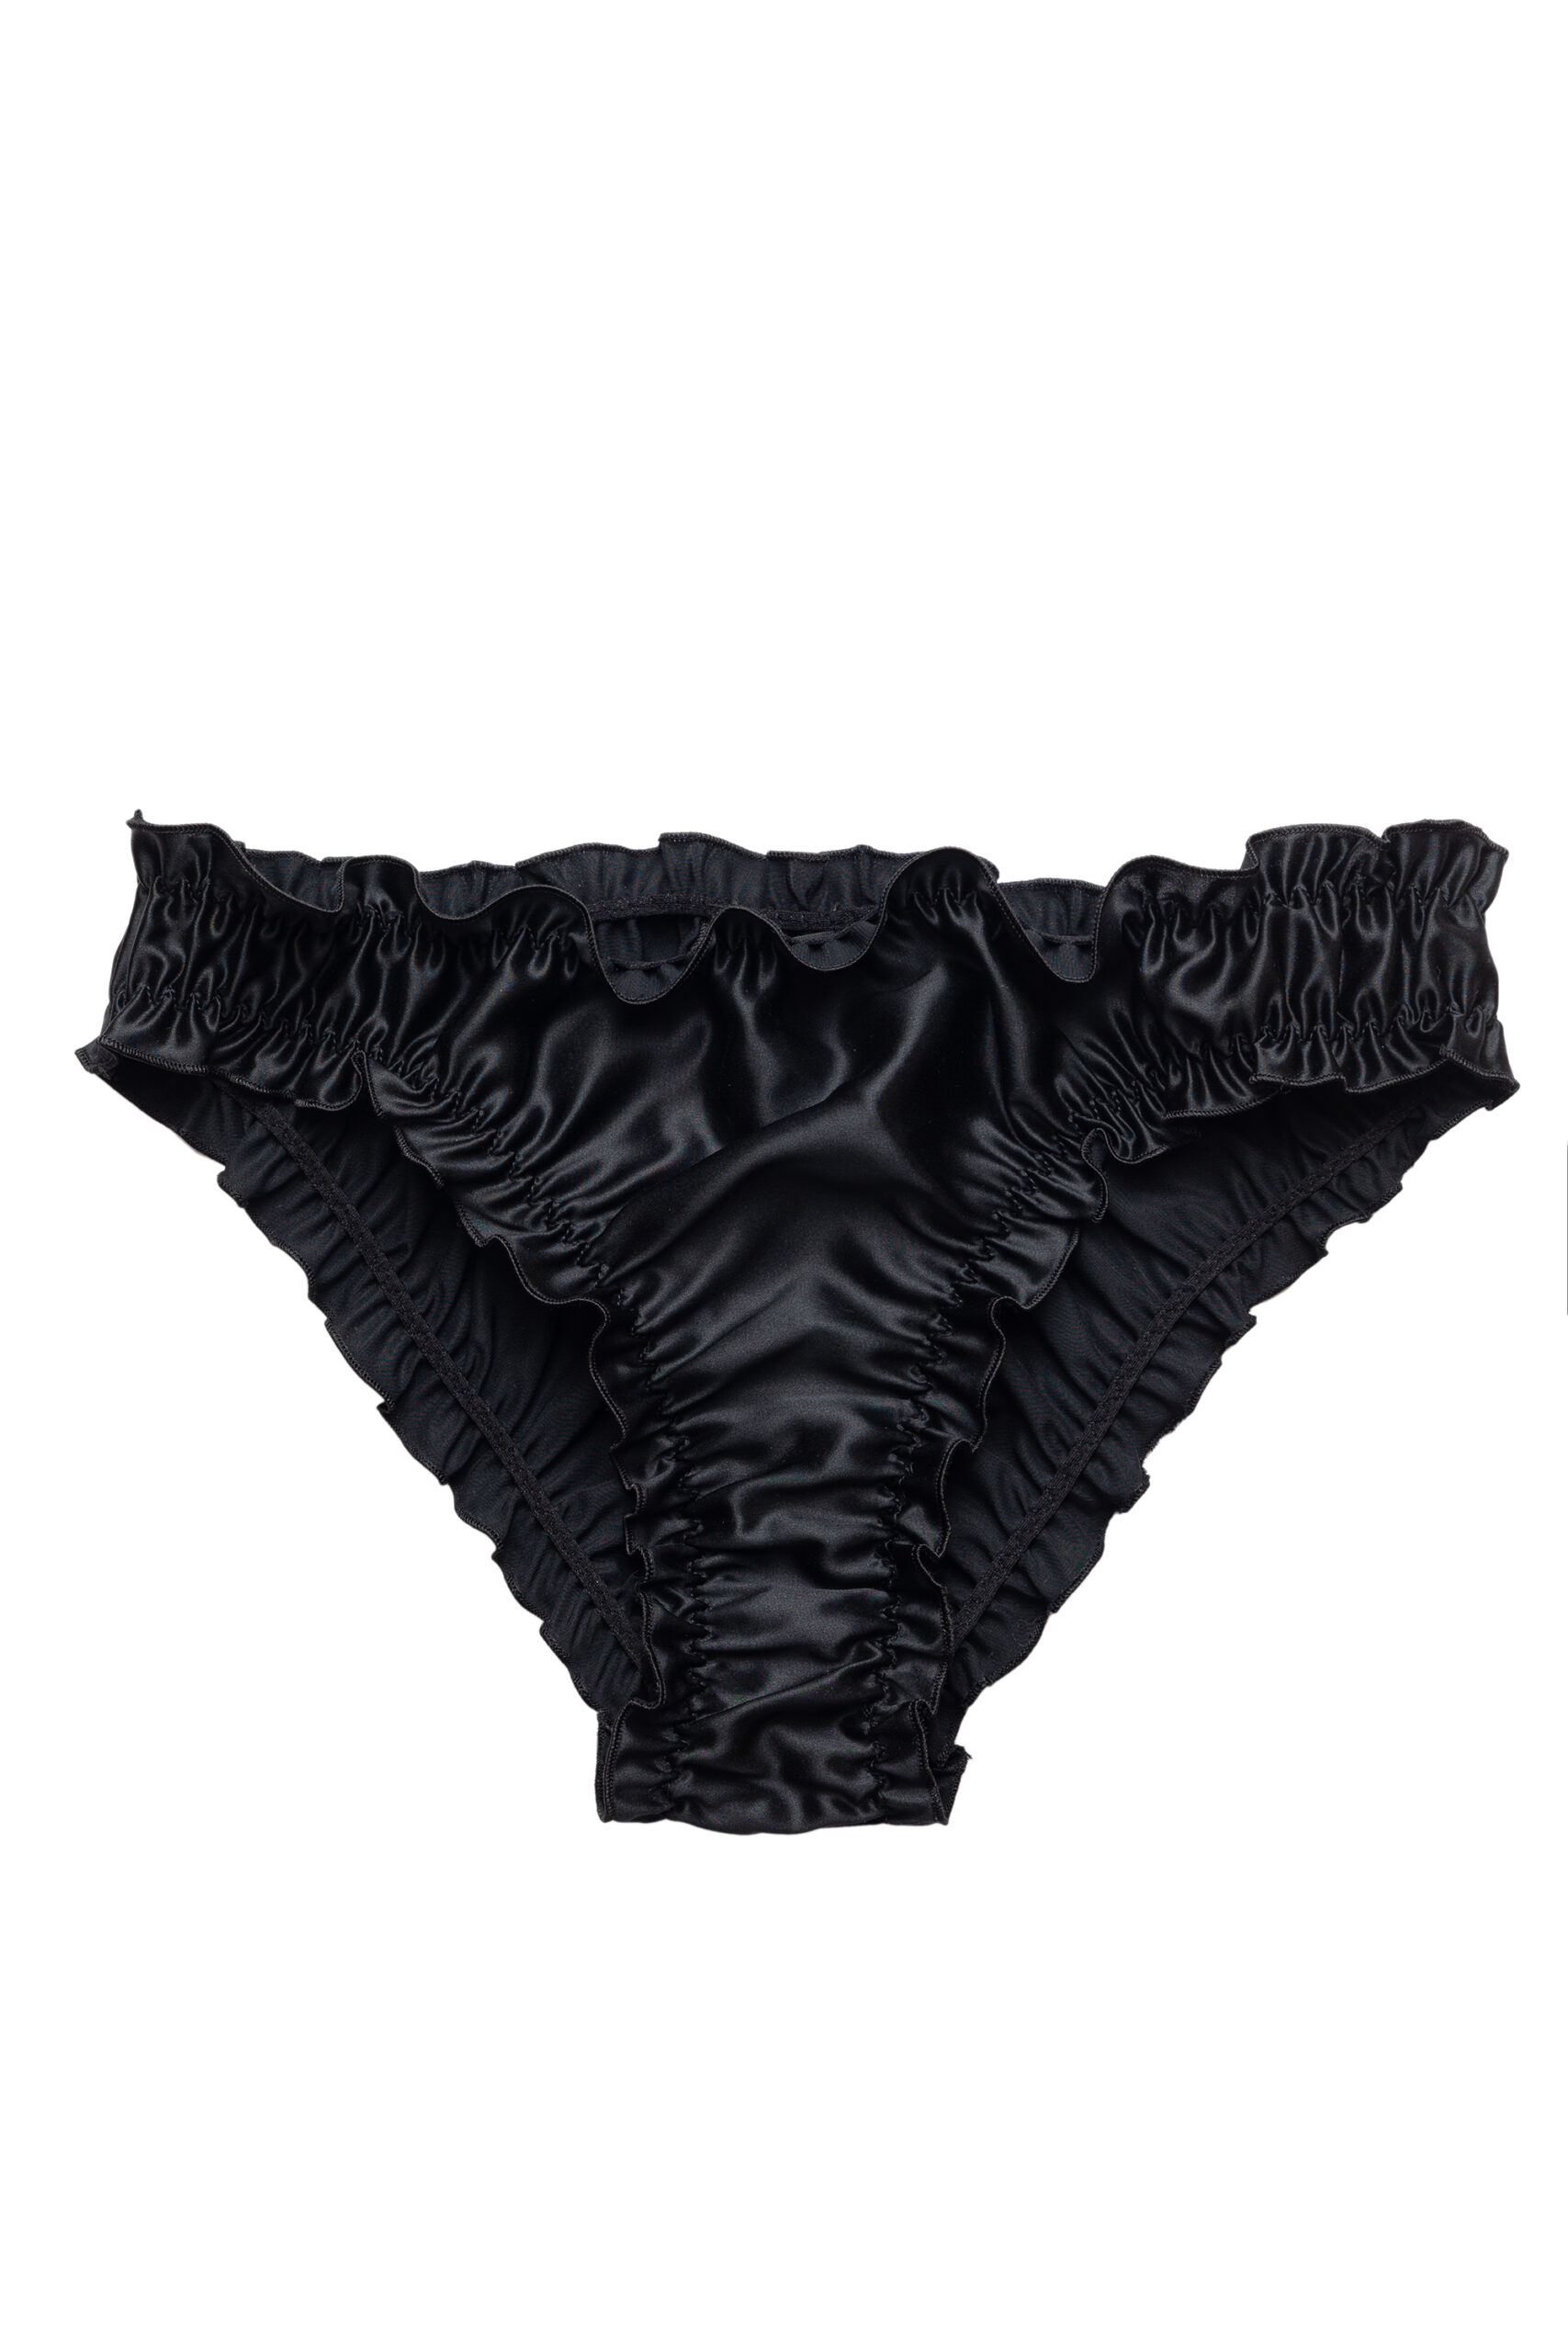 Silksilky Black Silk Undergarments 4Pcs Comfy Women's Underwear – SILKSILKY